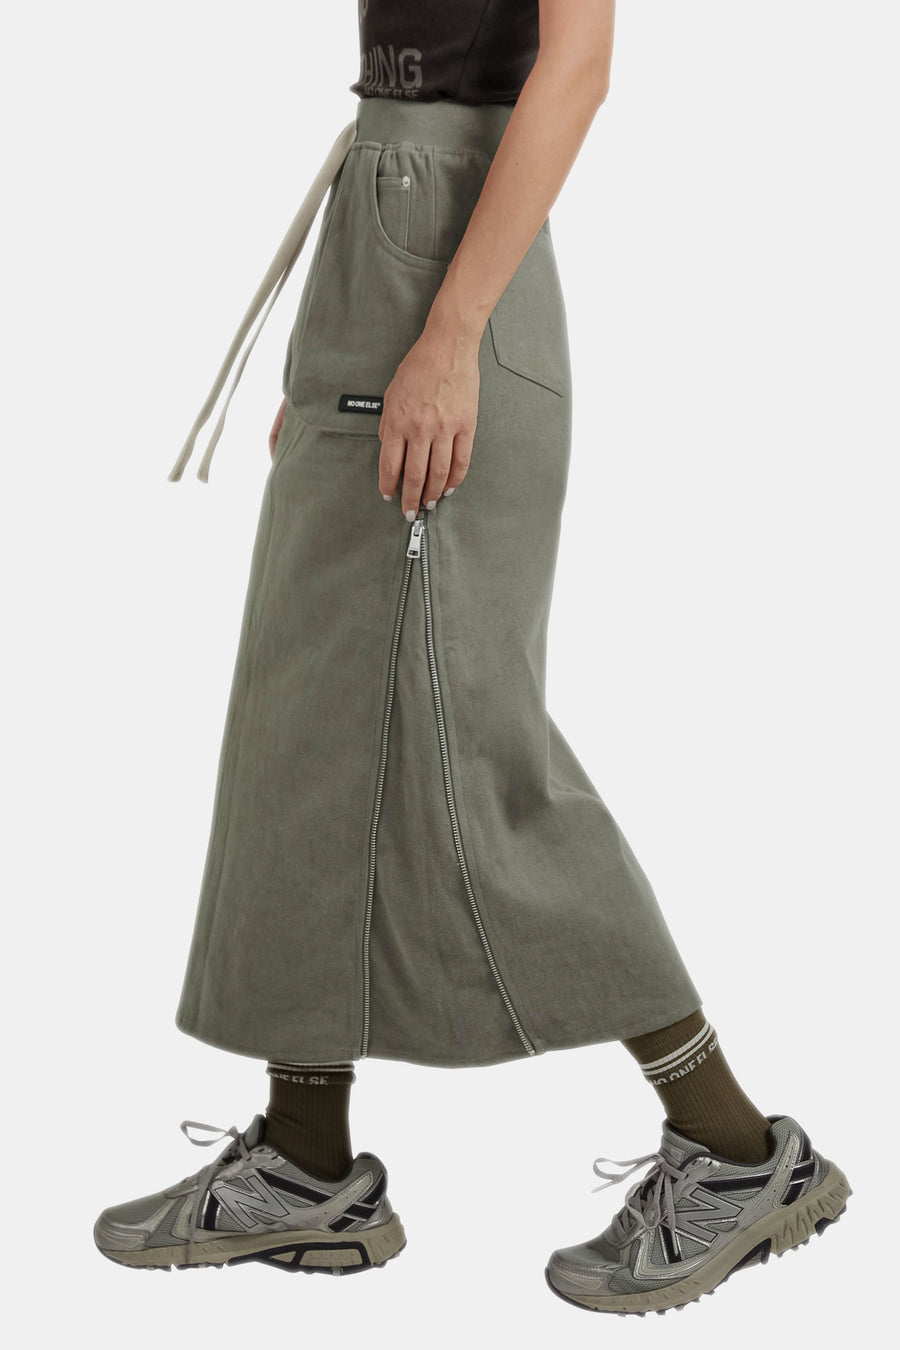 CHUU Pocket Casual Long String Skirt